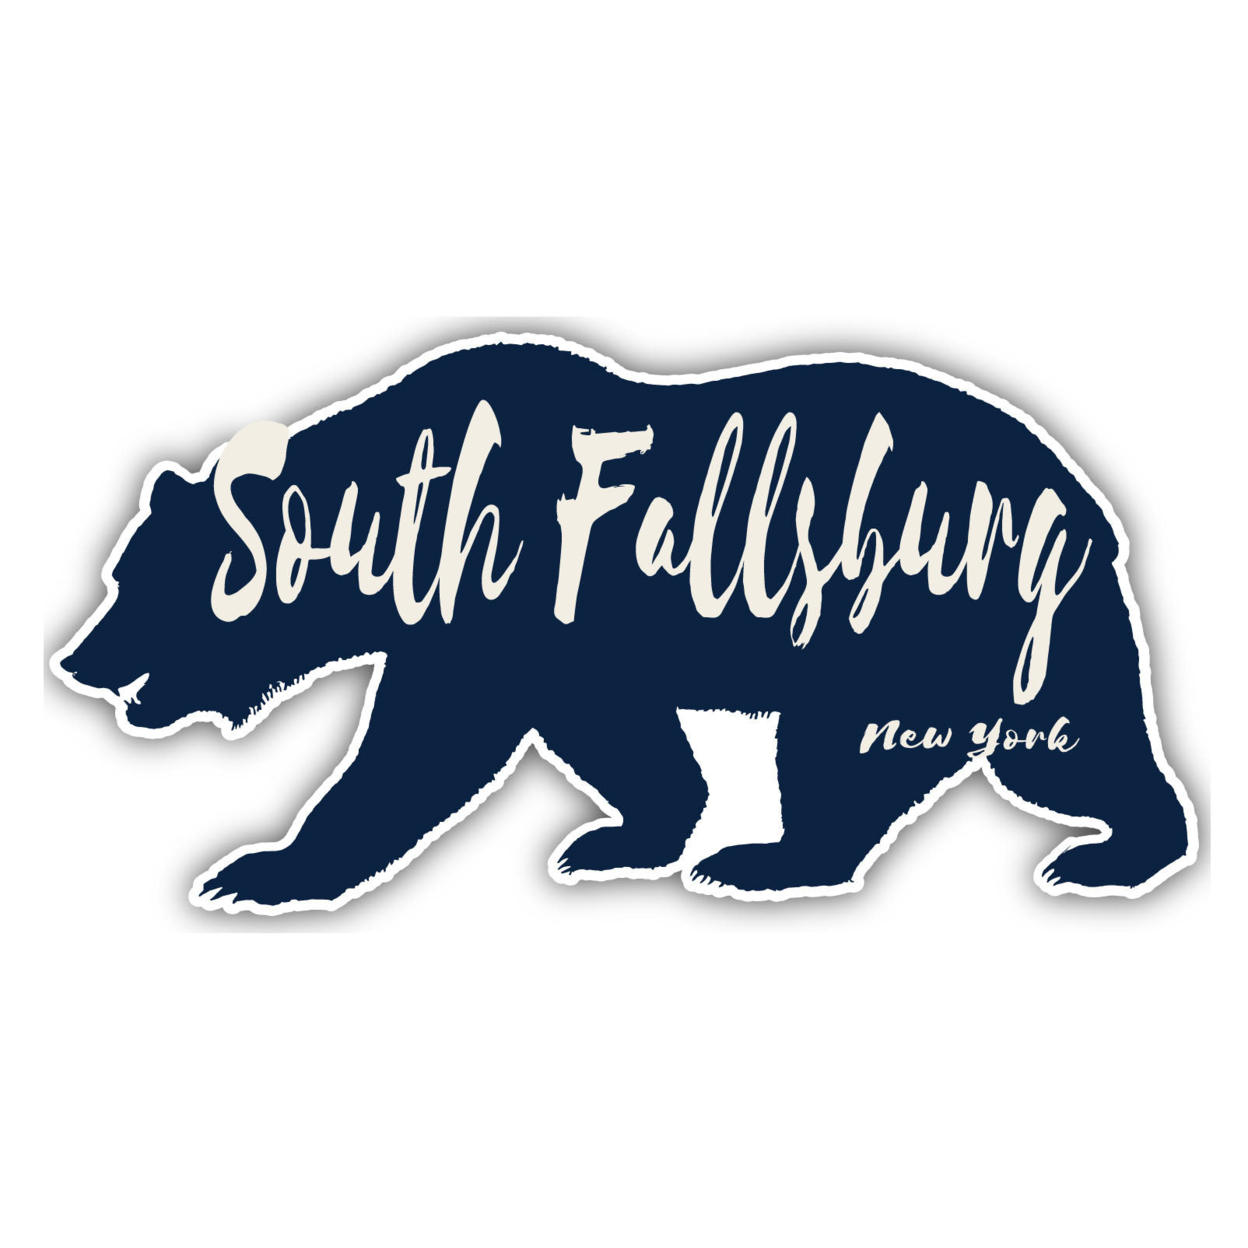 South Fallsburg New York Souvenir Decorative Stickers (Choose Theme And Size) - Single Unit, 4-Inch, Bear